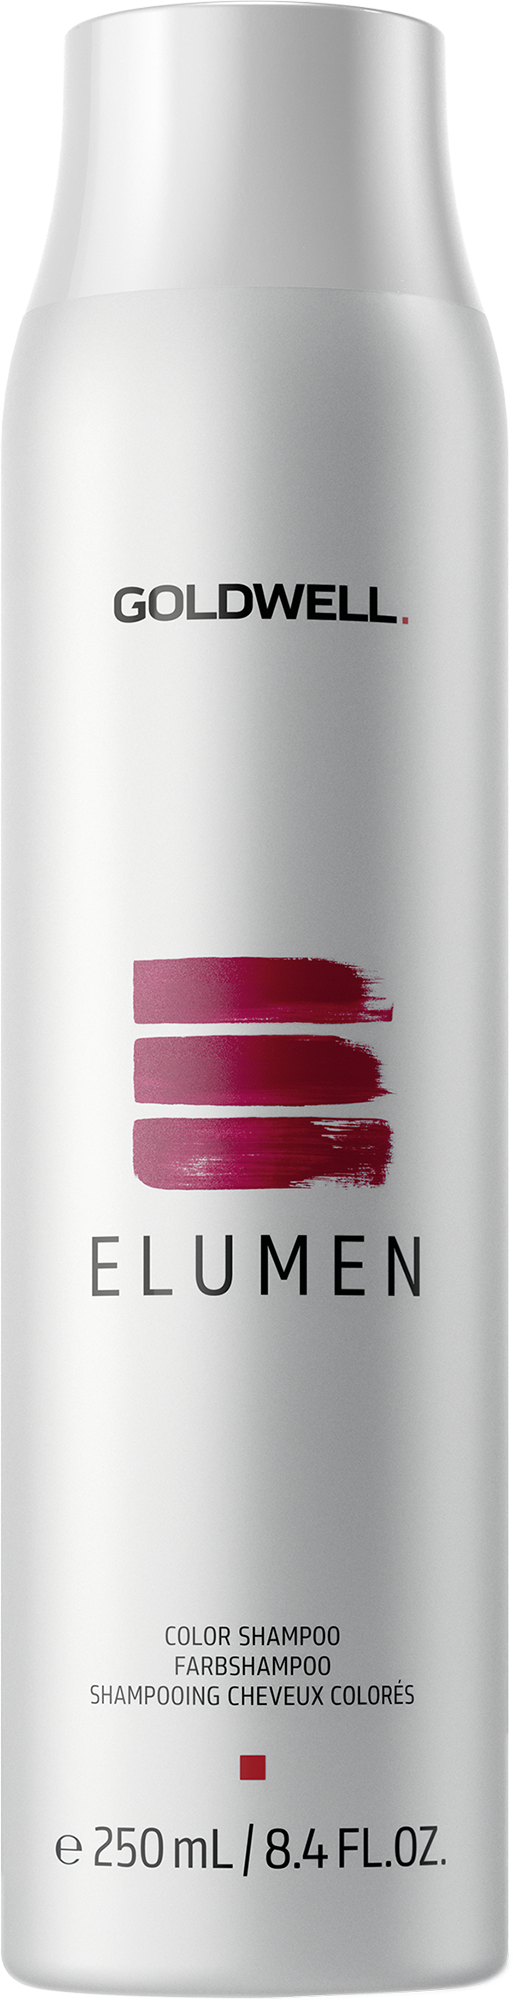 Elumen Color Shampoo, 250ml